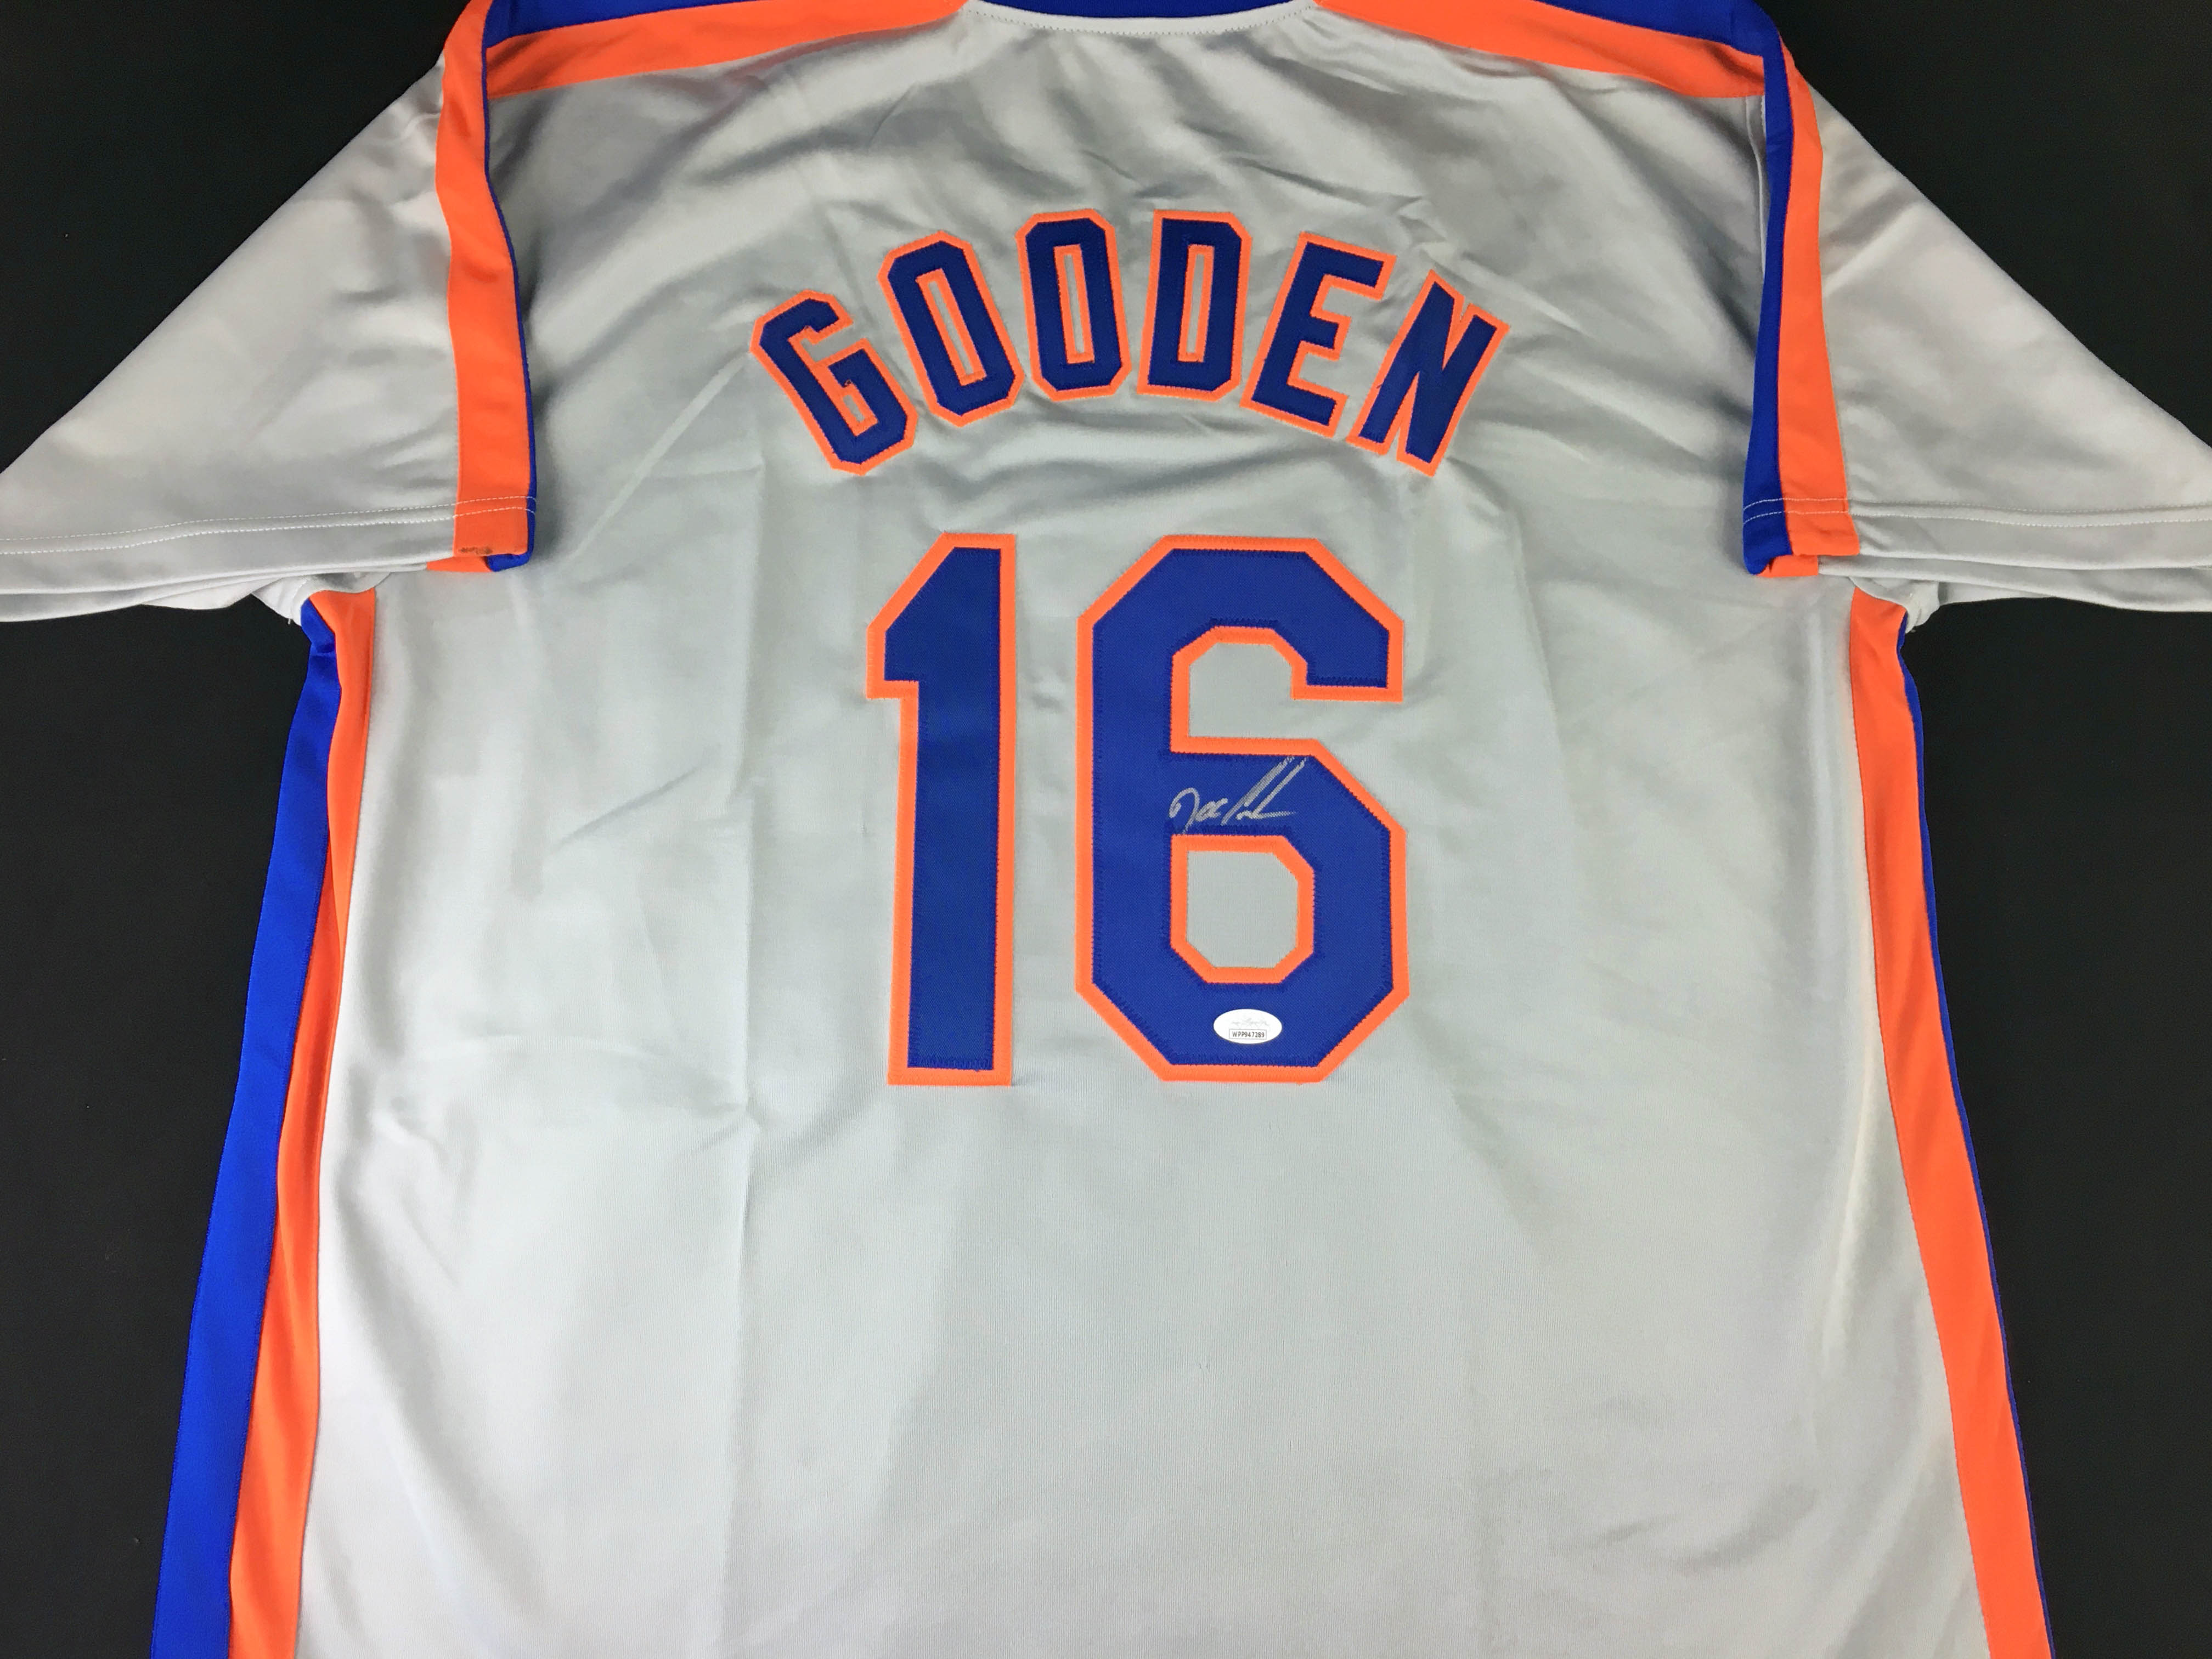 Dwight Gooden Signed Gray Baseball Jersey: BM Authentics – HUMBL